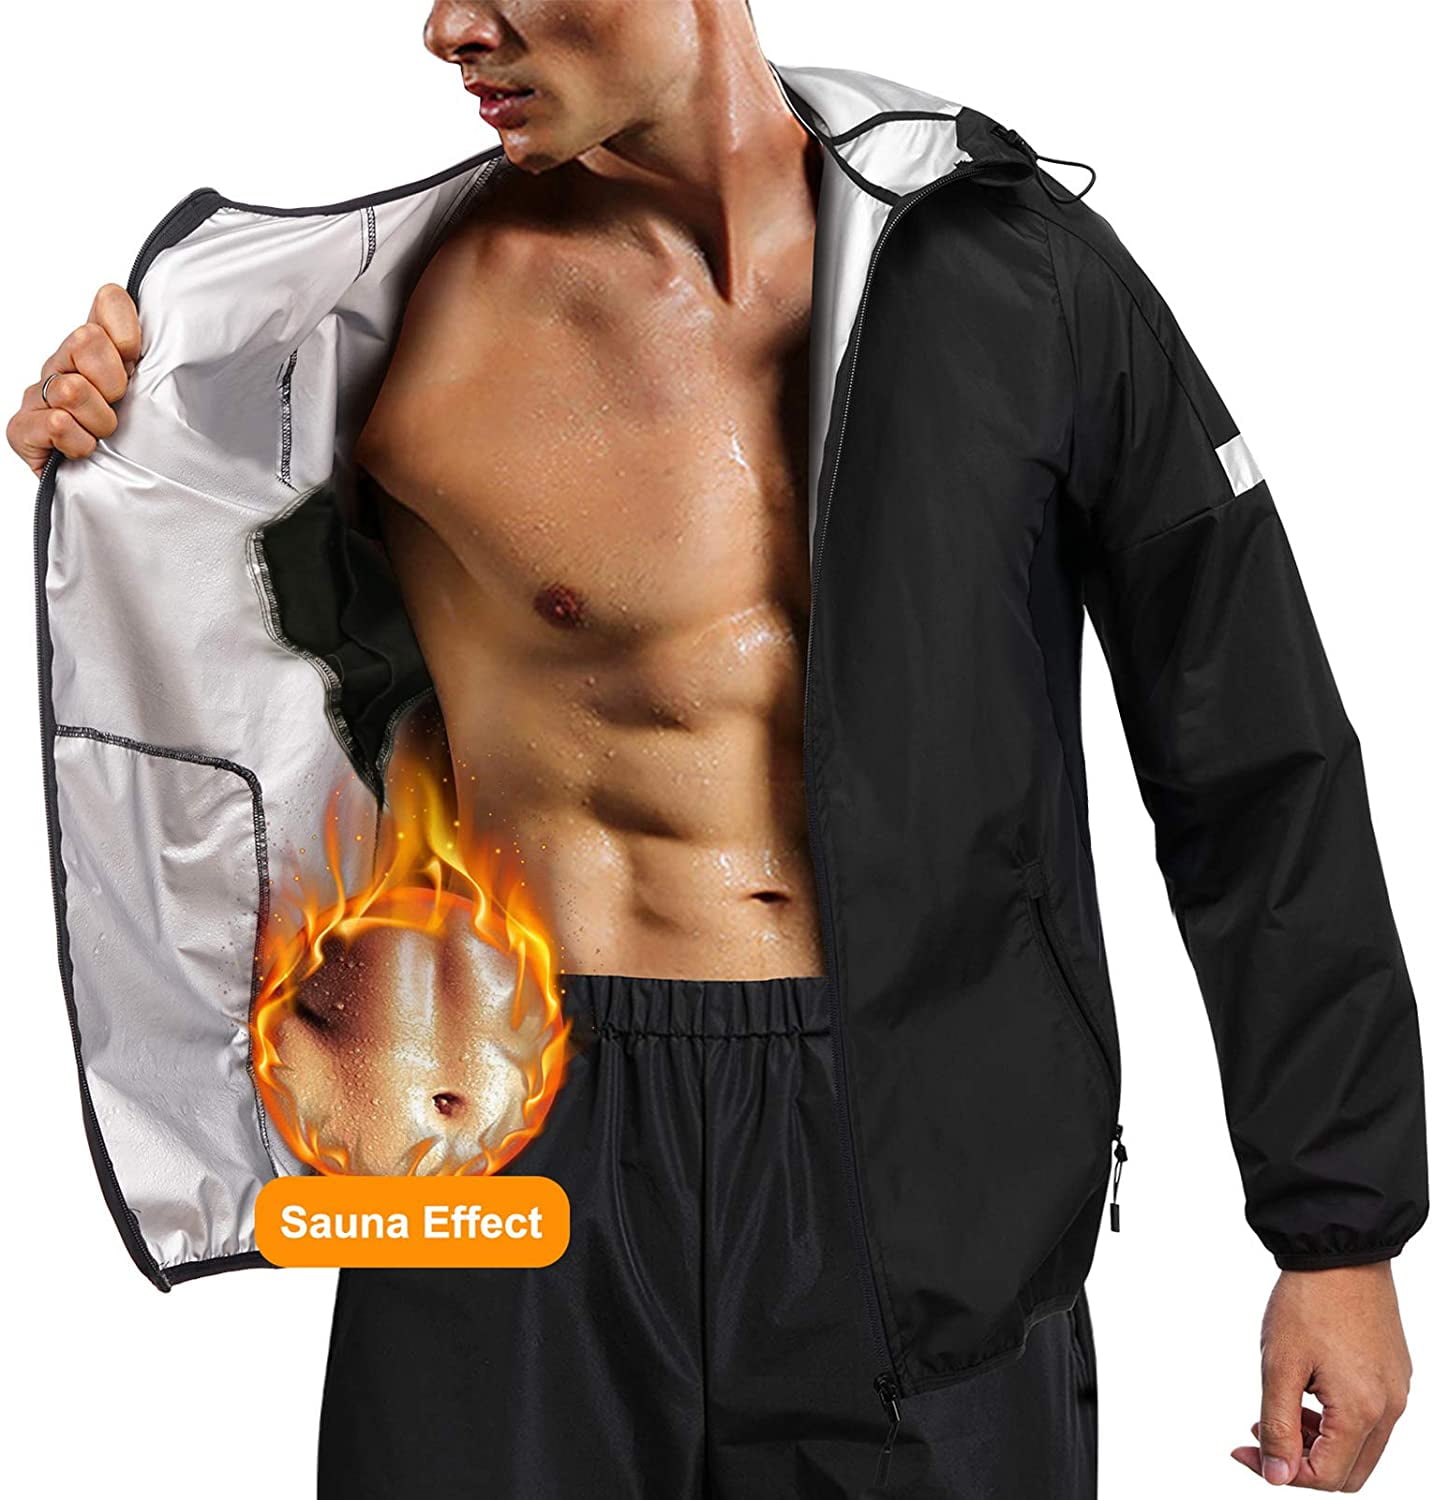 Details about   Neoprene Men Vest Body Shaper Hot Sweat Workout Tank Top Sauna Suit Long sleeve 